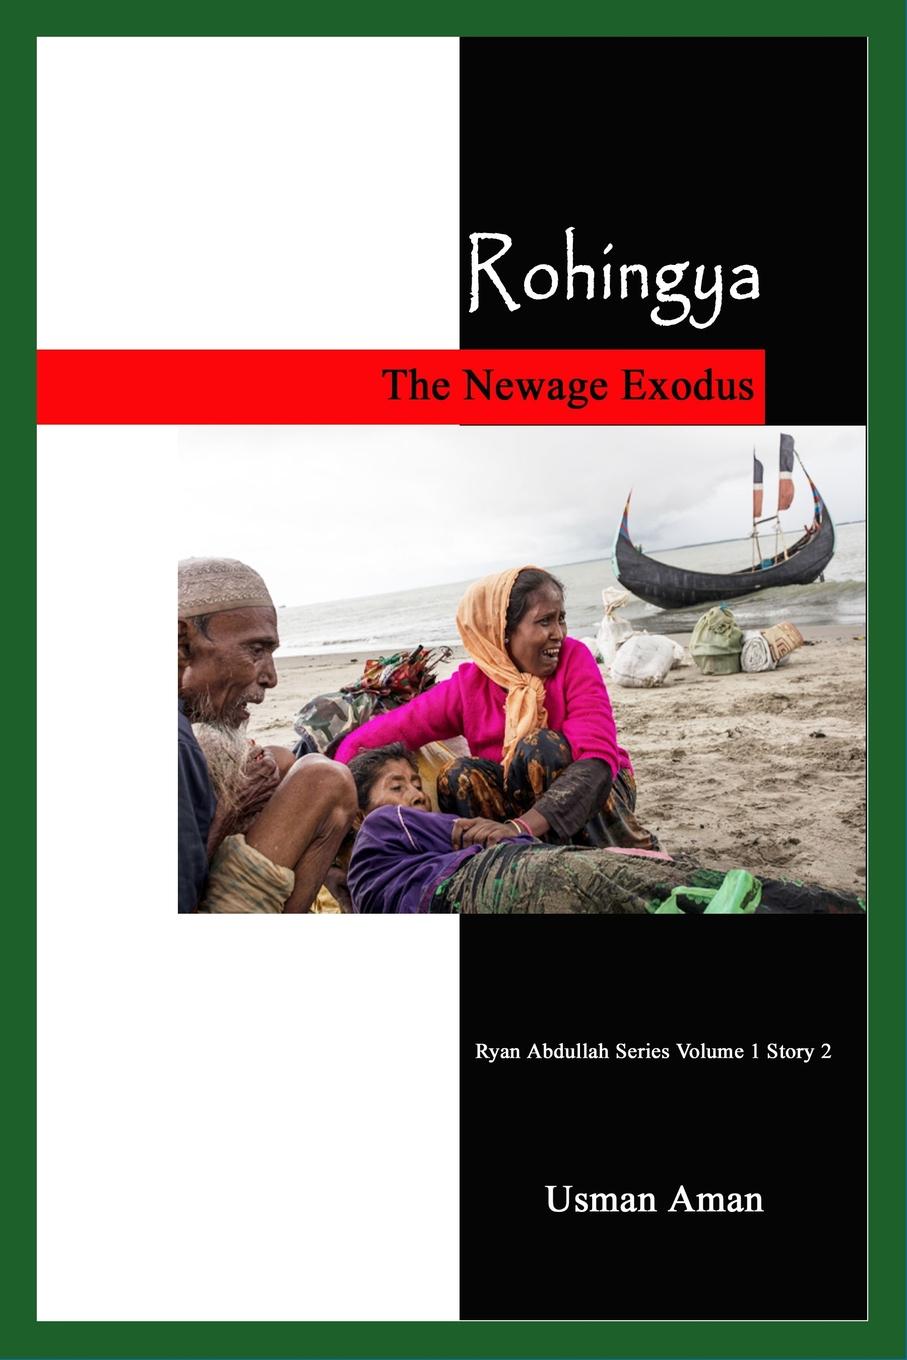 Rohingya - The Newage Exodus